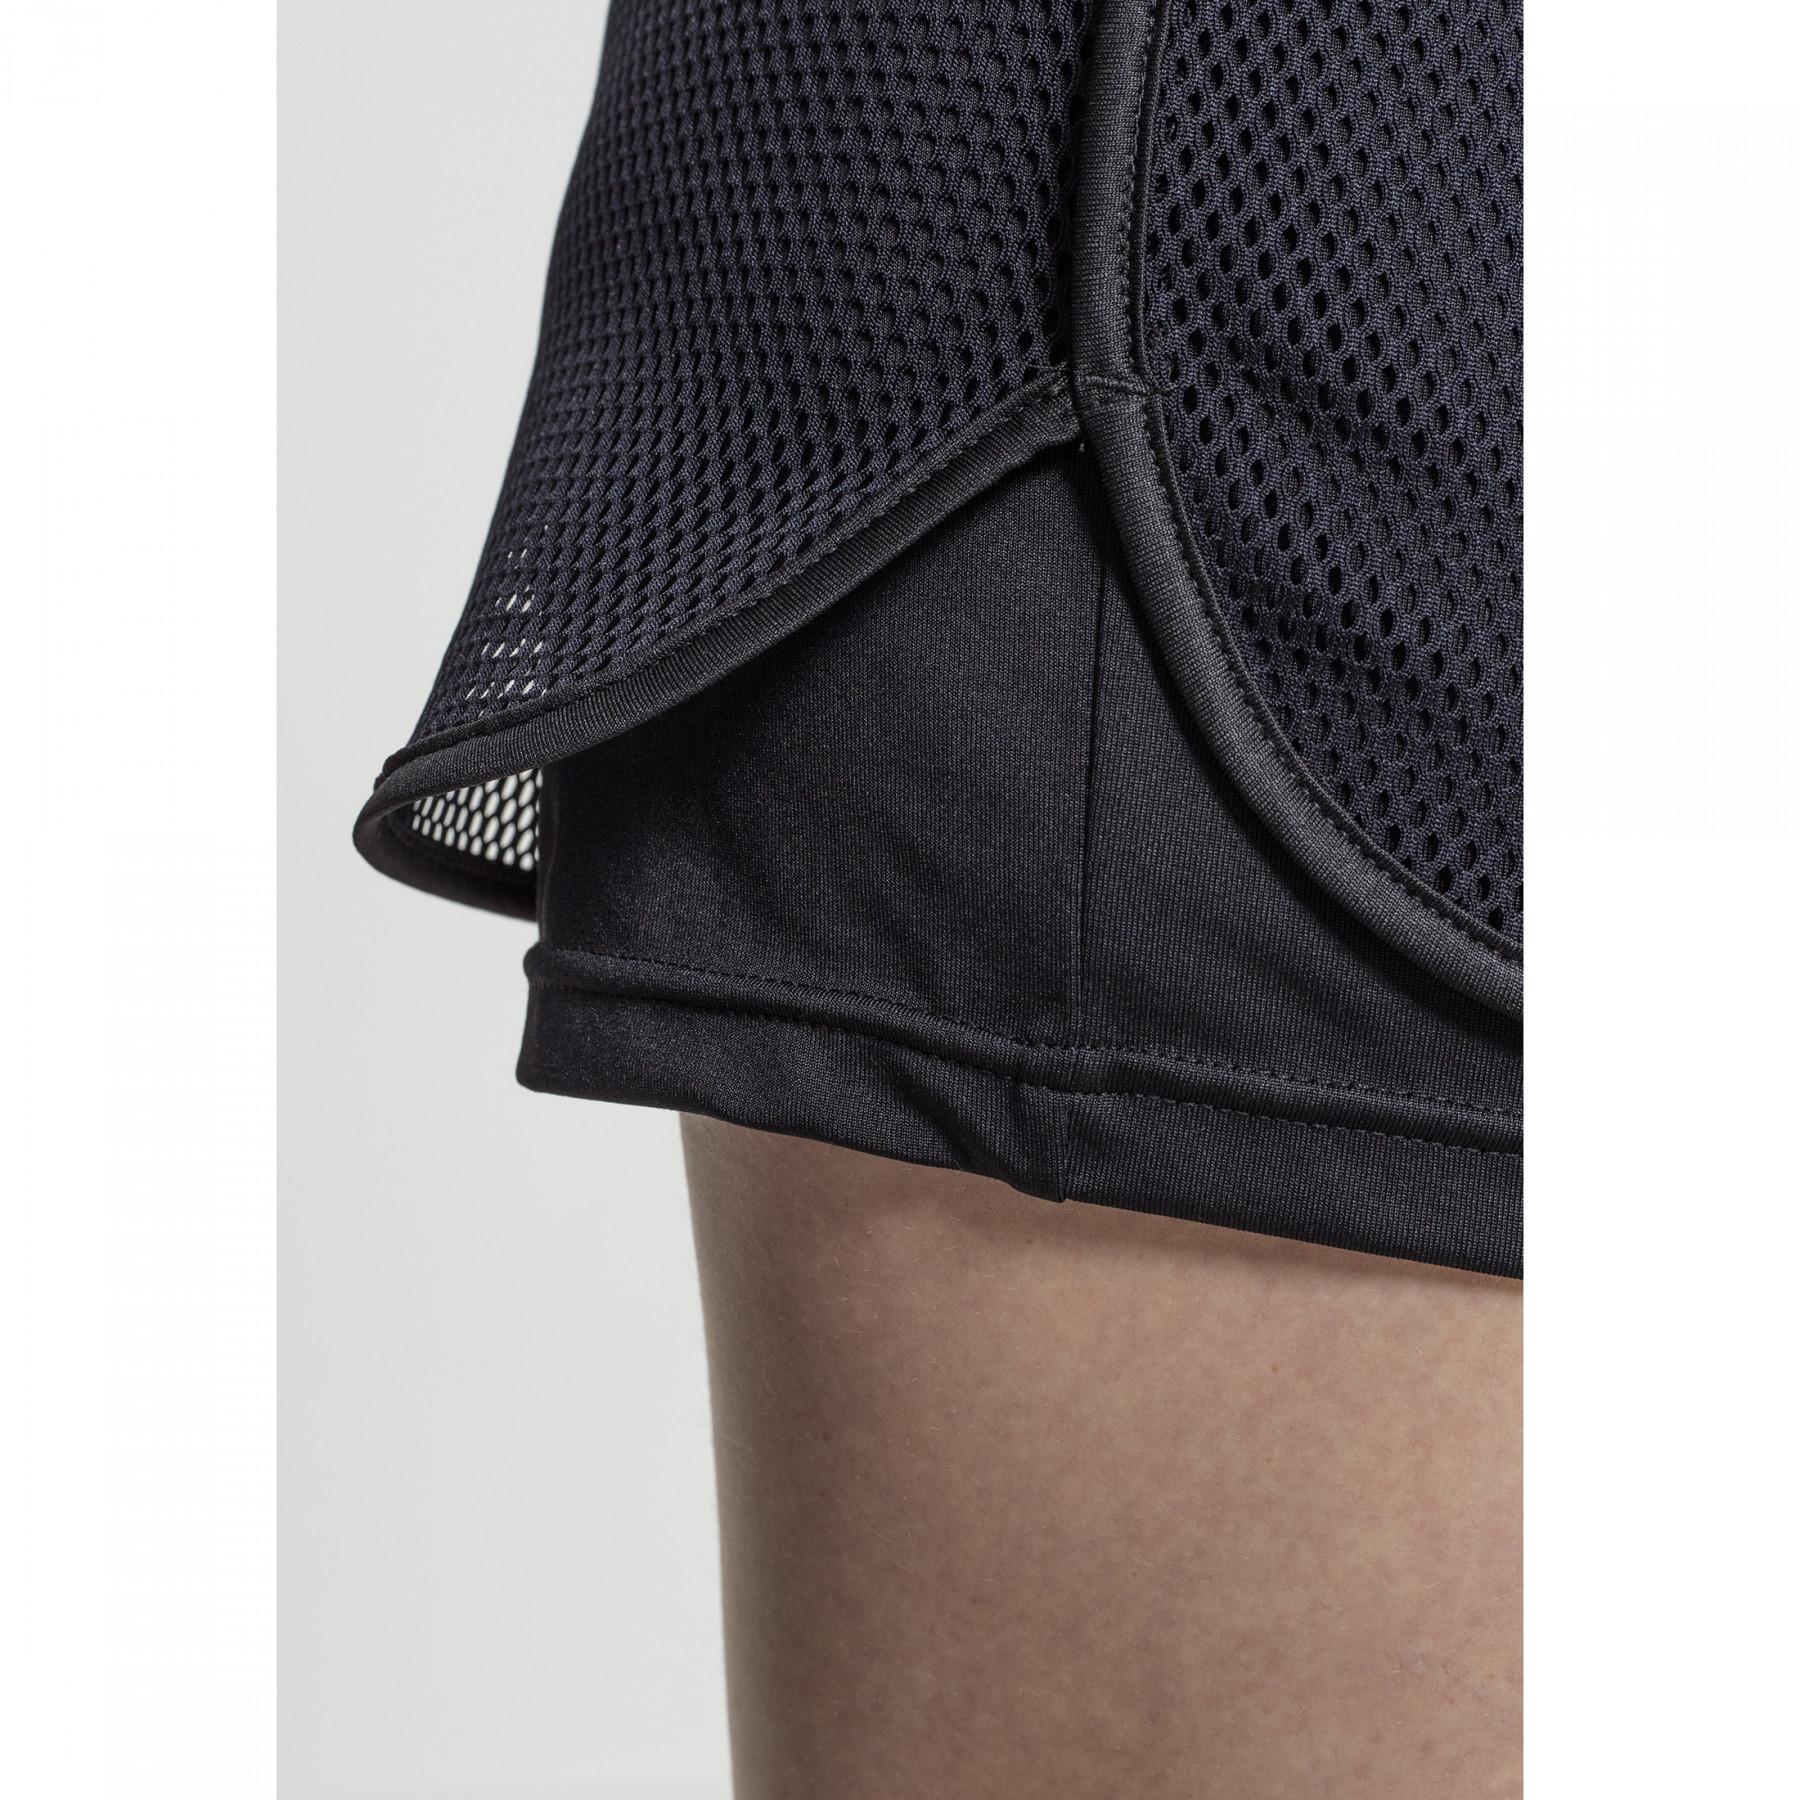 Damen Urban Classic doppellagige Mesh-Shorts